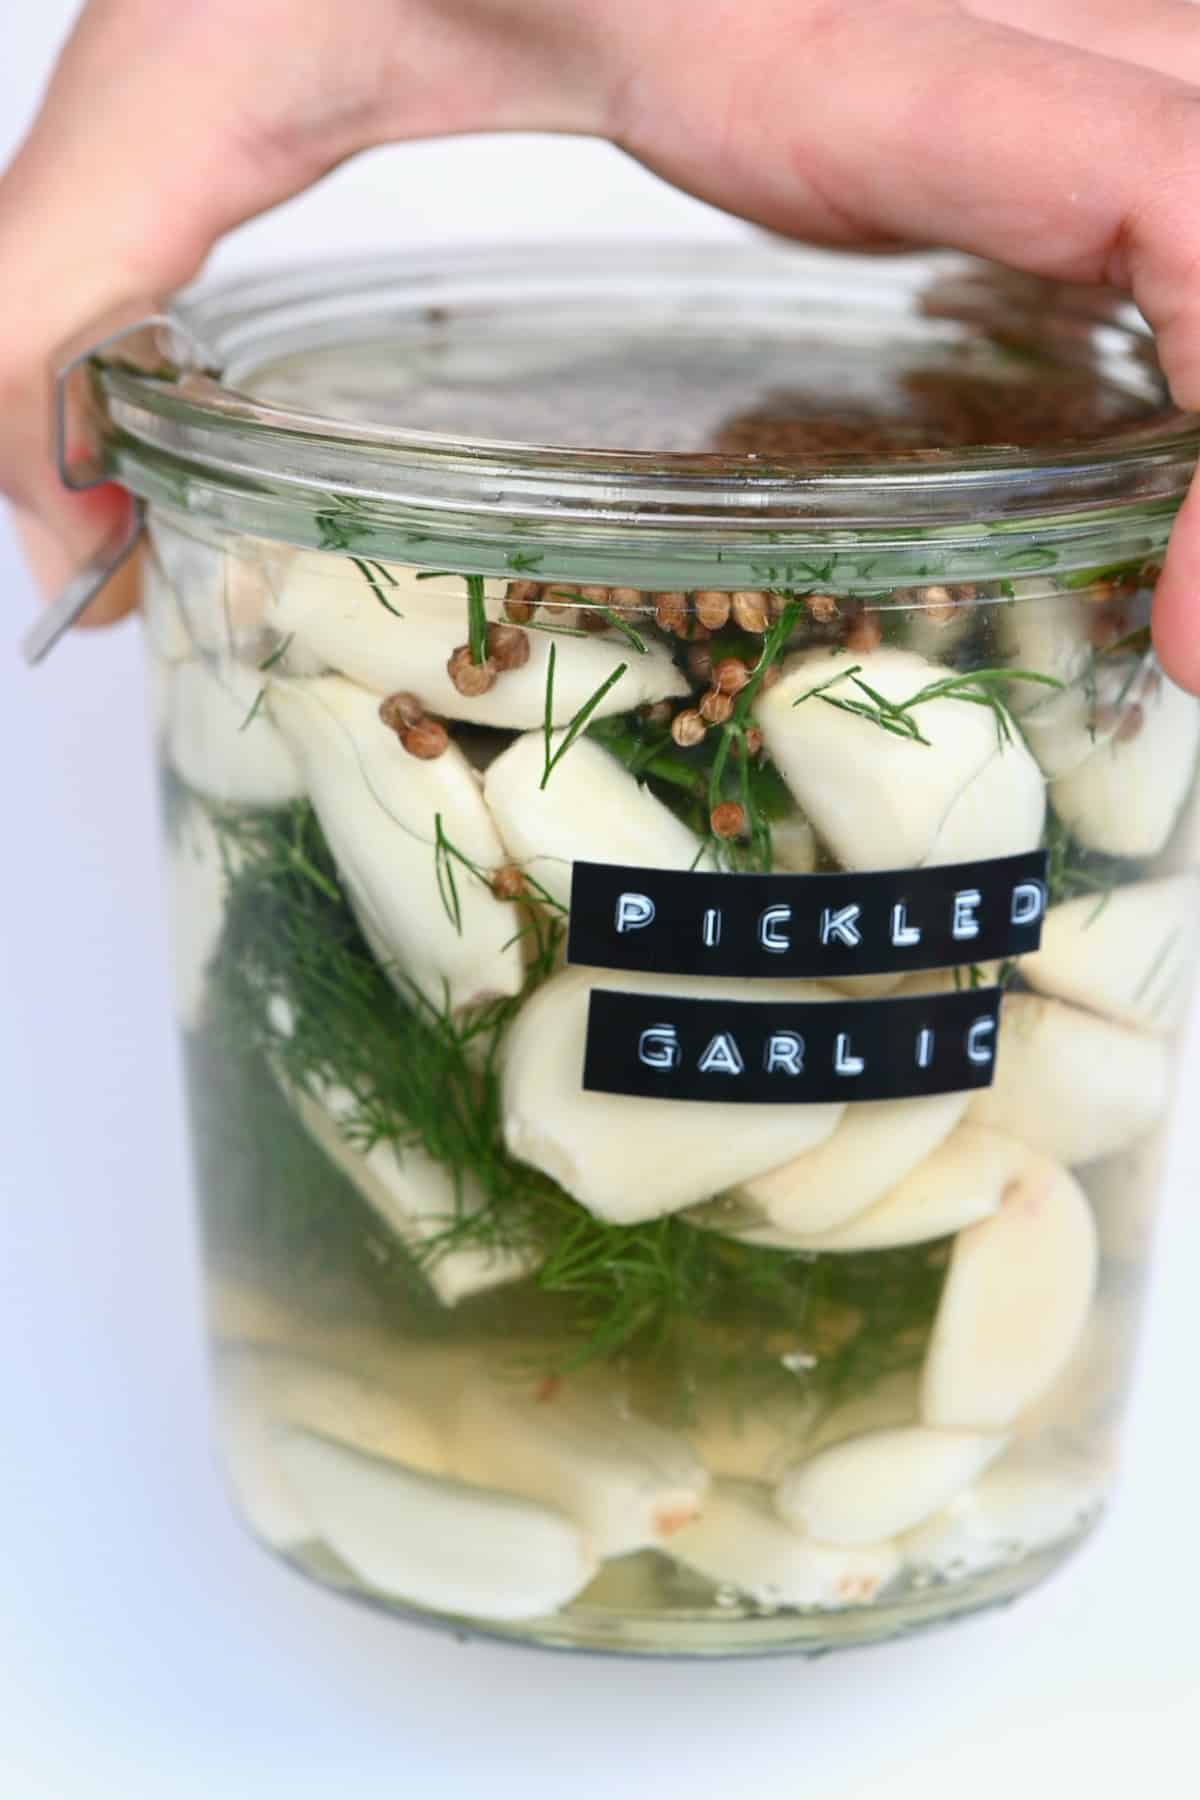 A jar with pickled garlic